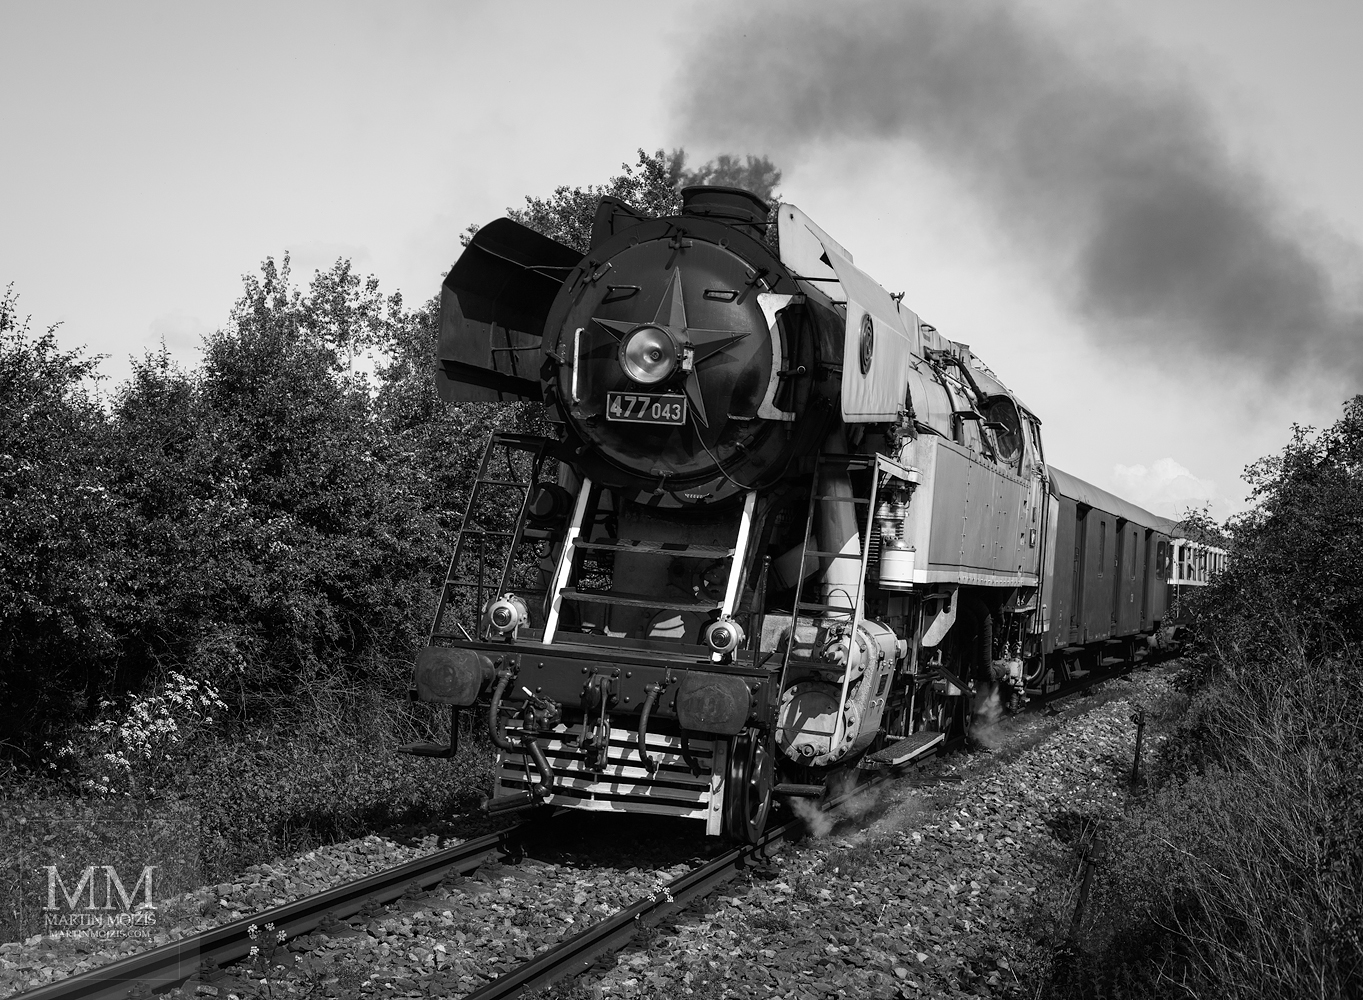 Fine Art photograph of the steam locomotive no. 477 043 Parrot in head of passenger train. Martin Mojzis.